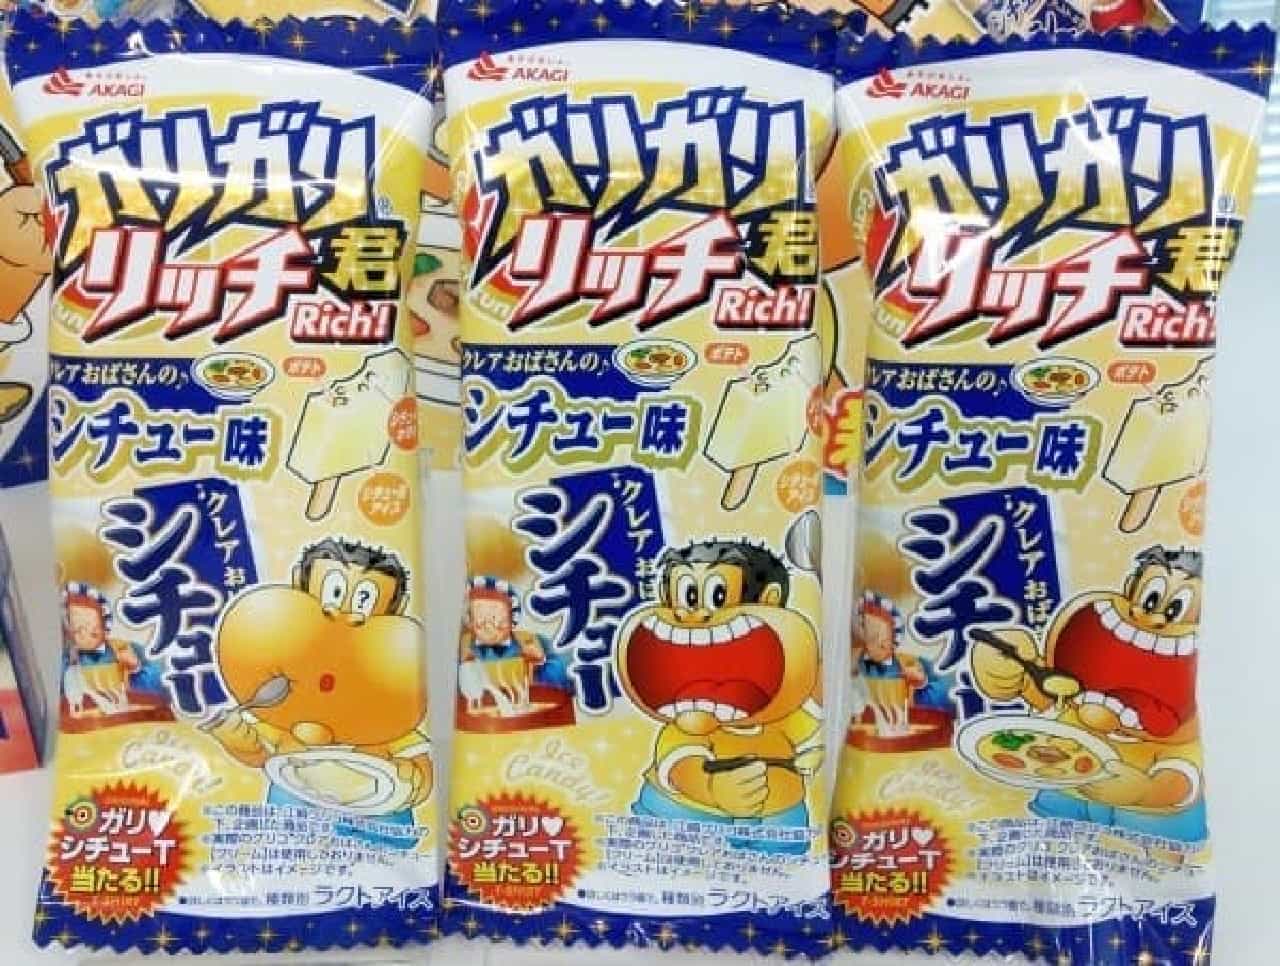 Gari-gari-kun "stew taste" will be released!